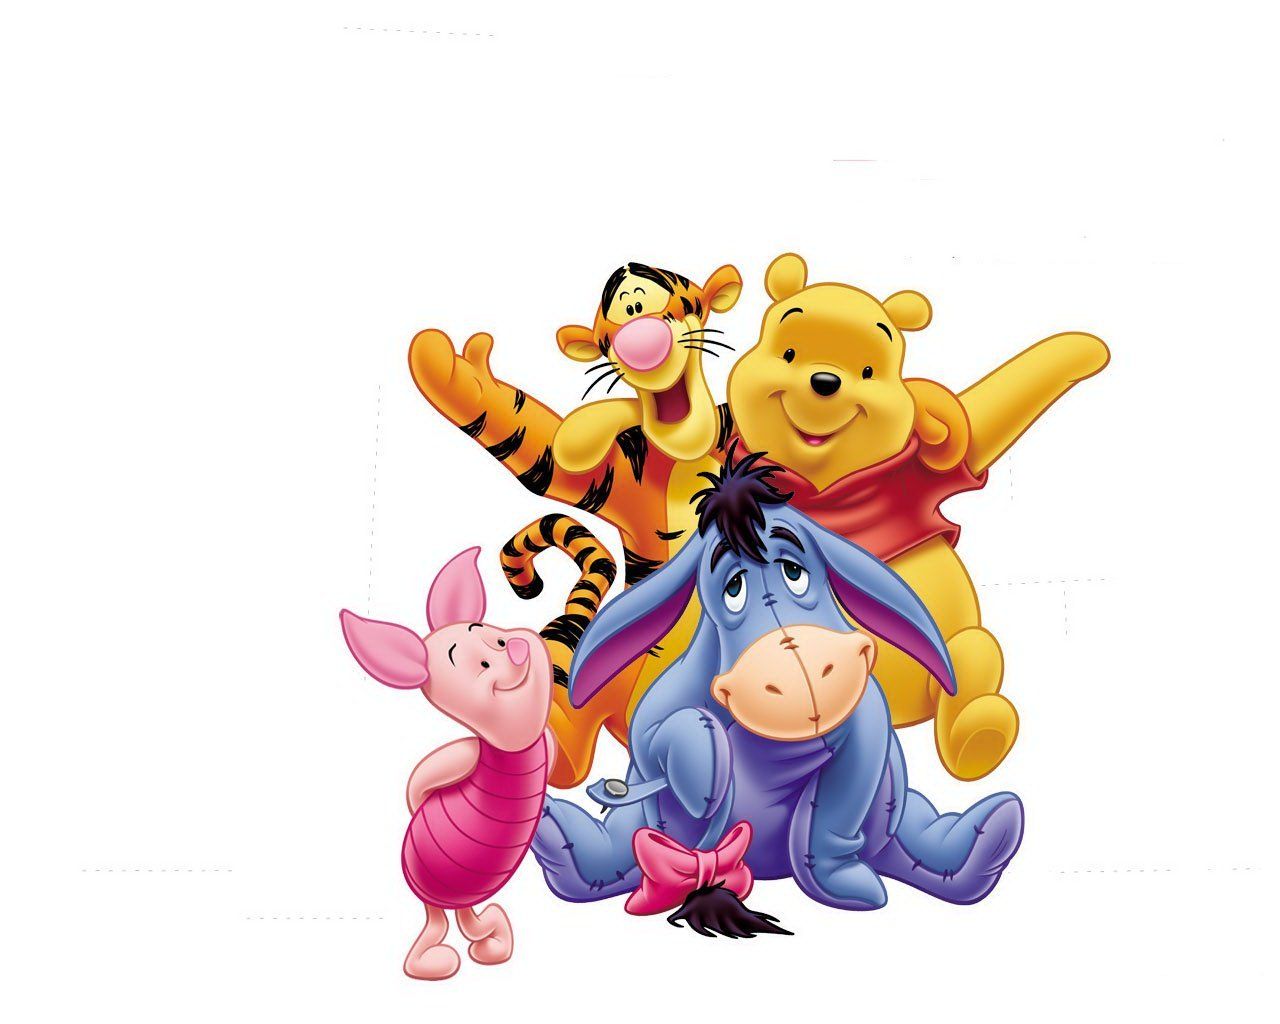 Winnie the Pooh Image Wallpaper for iPad mini 3